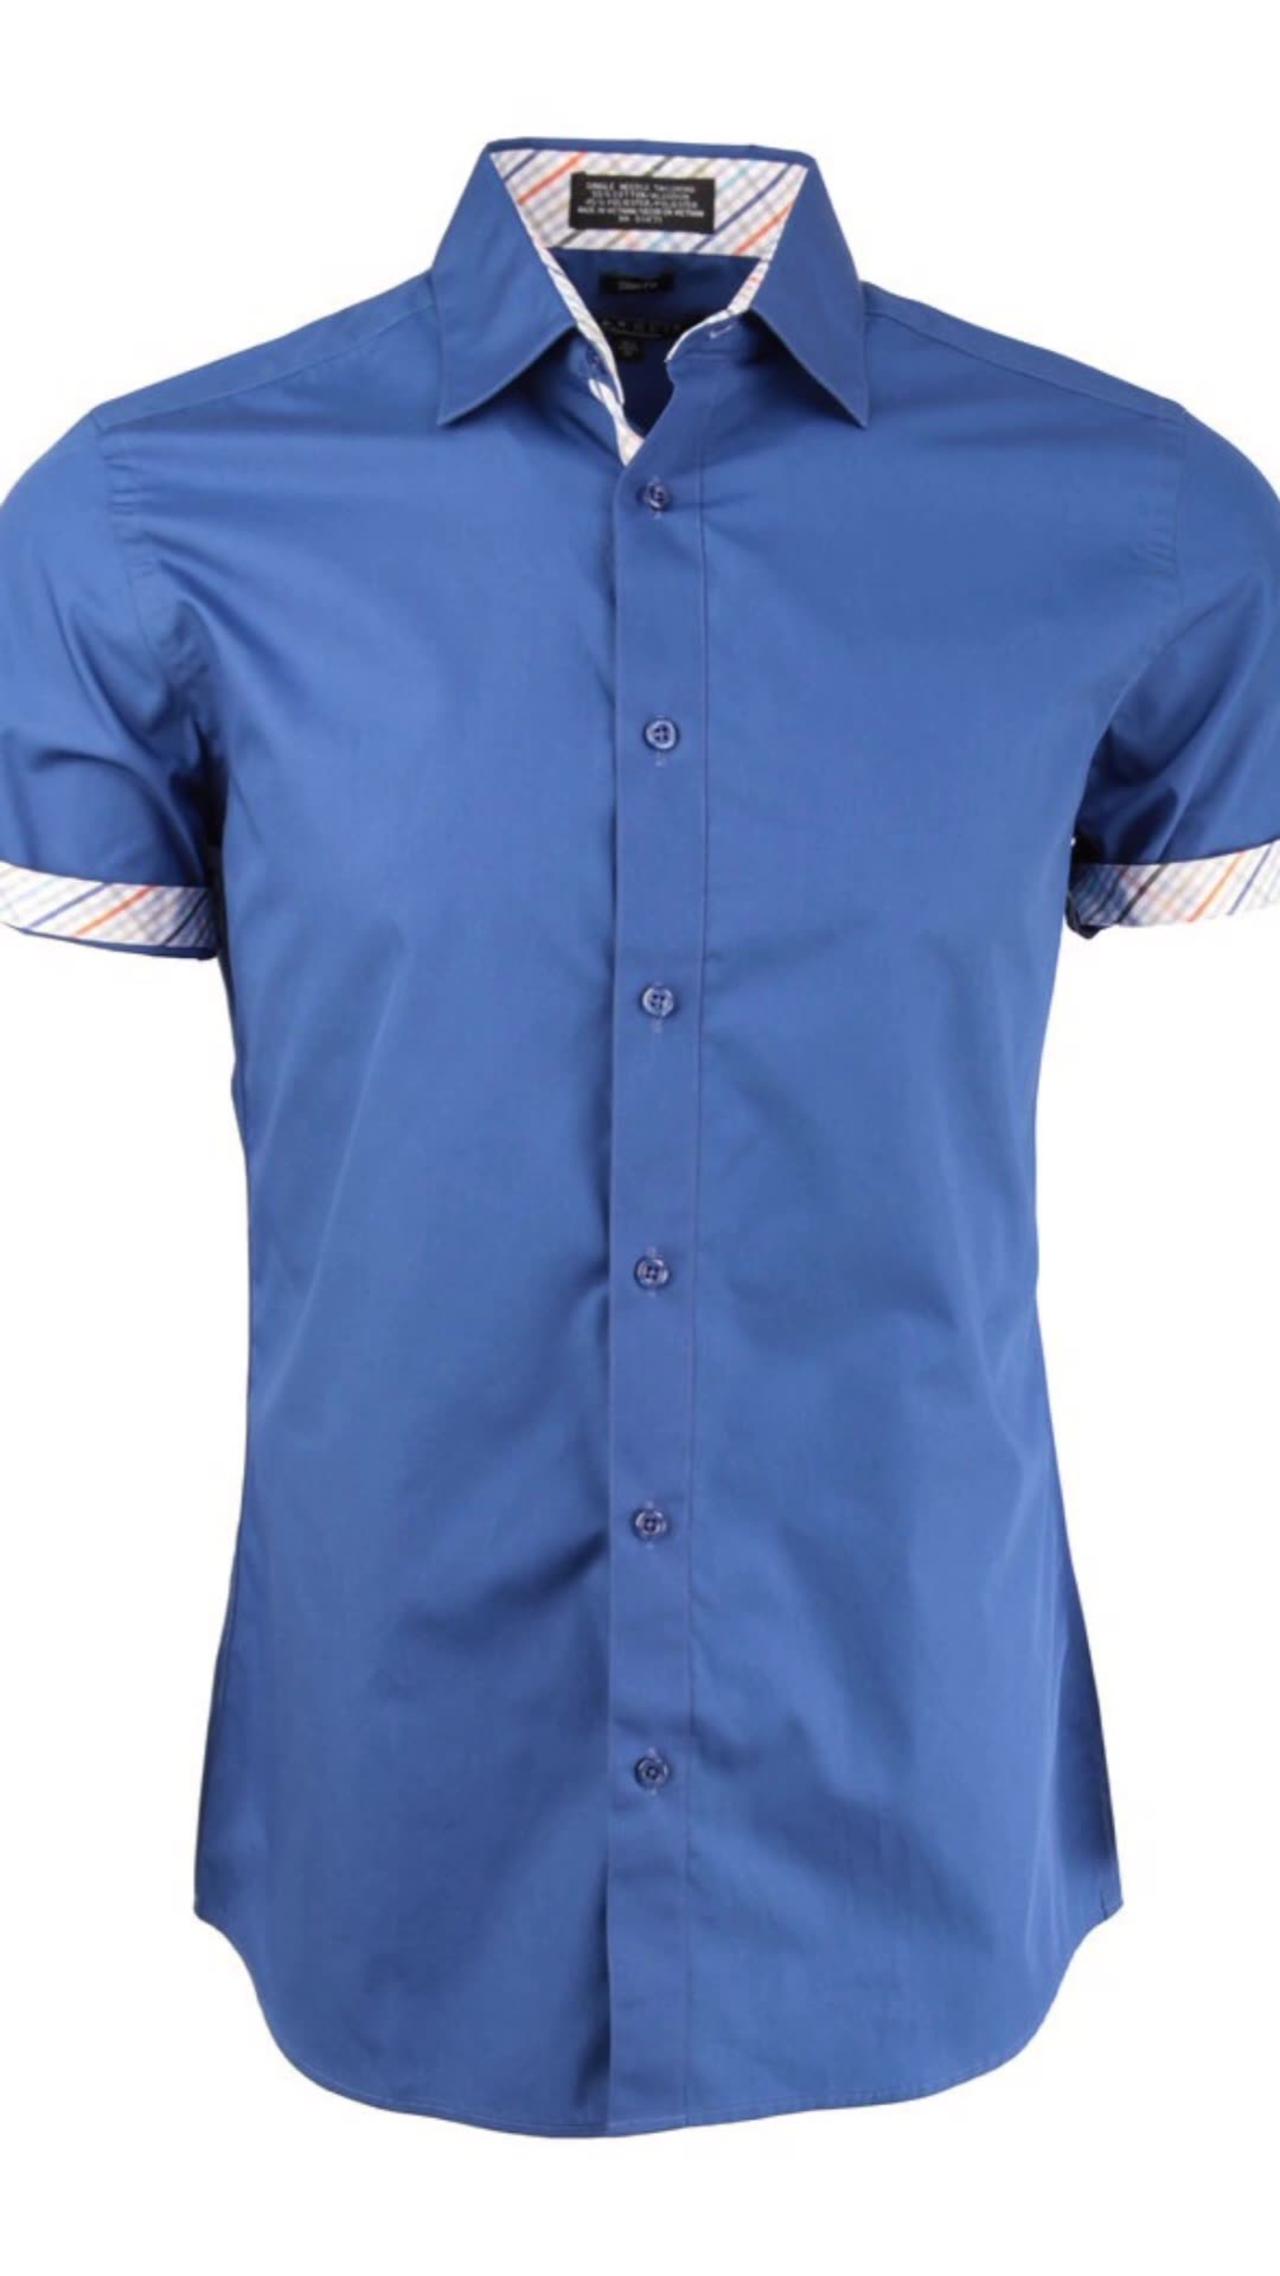 "Effortless Style: Trimmed Short Sleeve Shirt from La Mode Men's